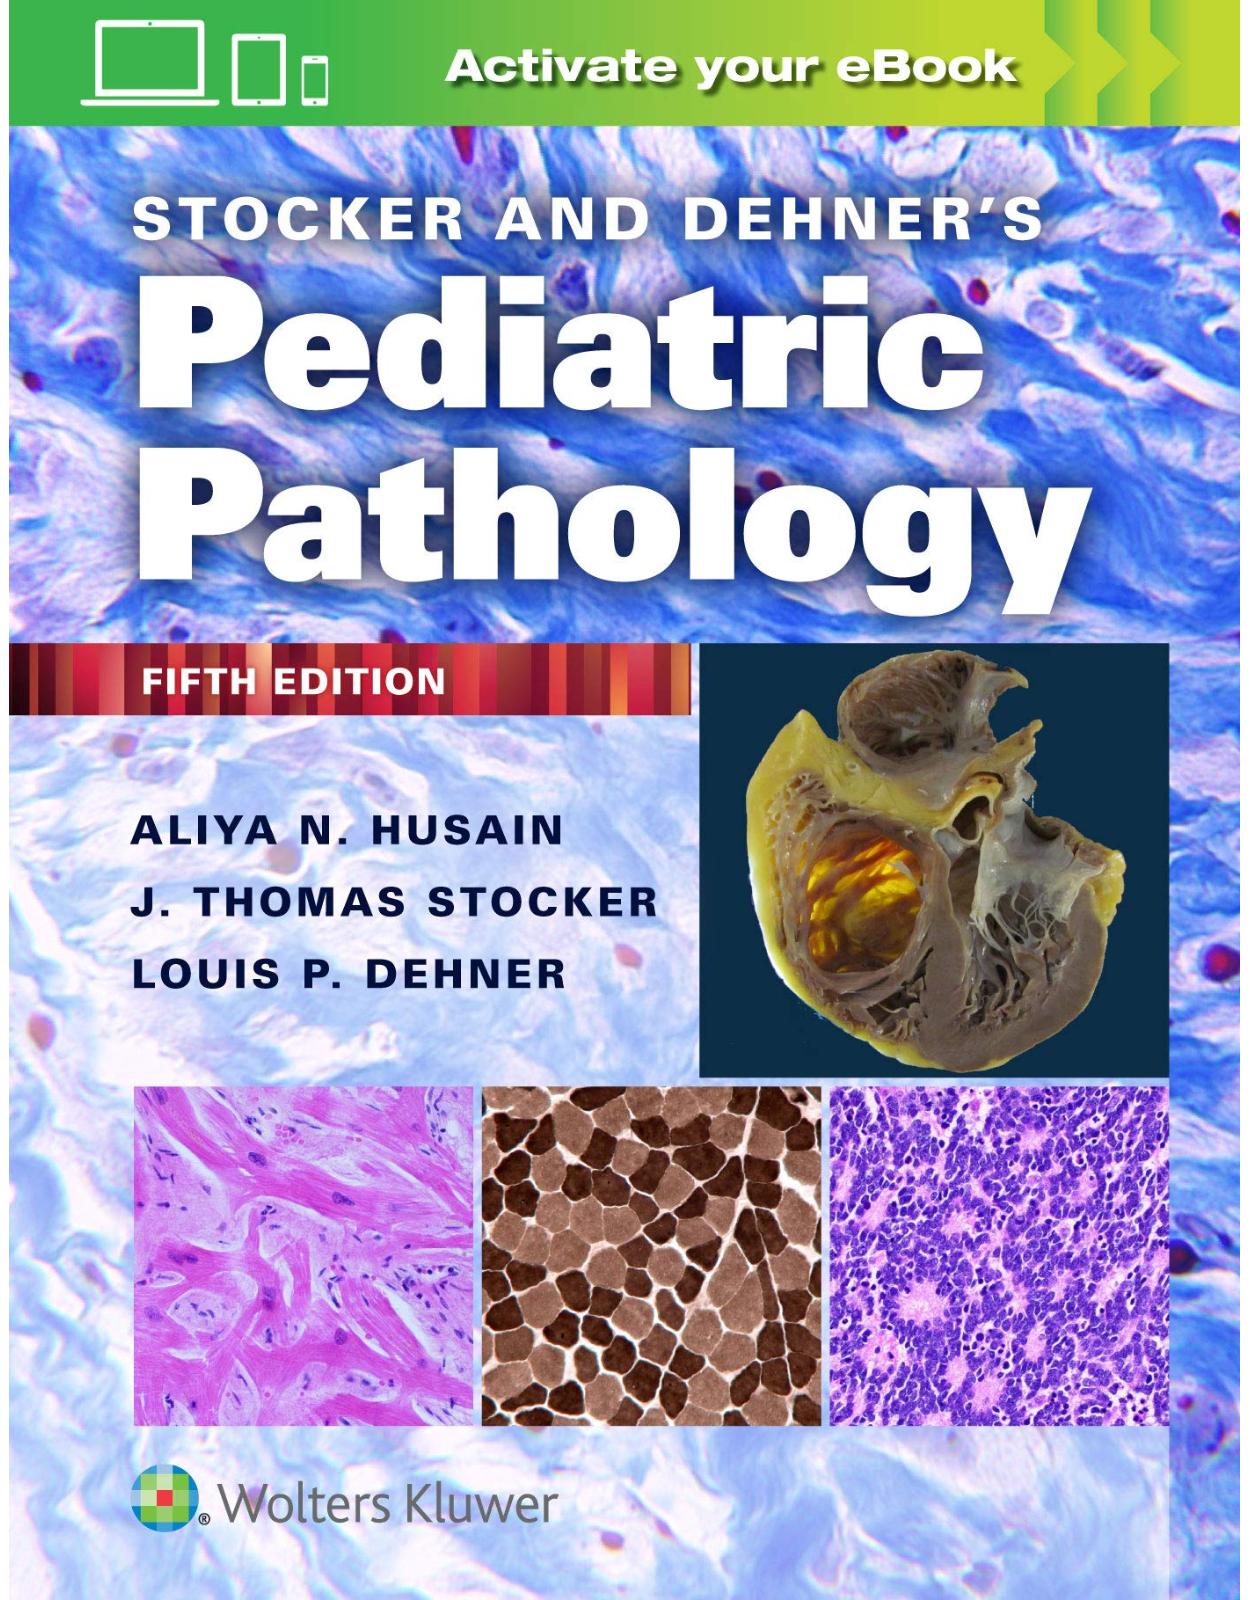 Stocker and Dehner’s Pediatric Pathology